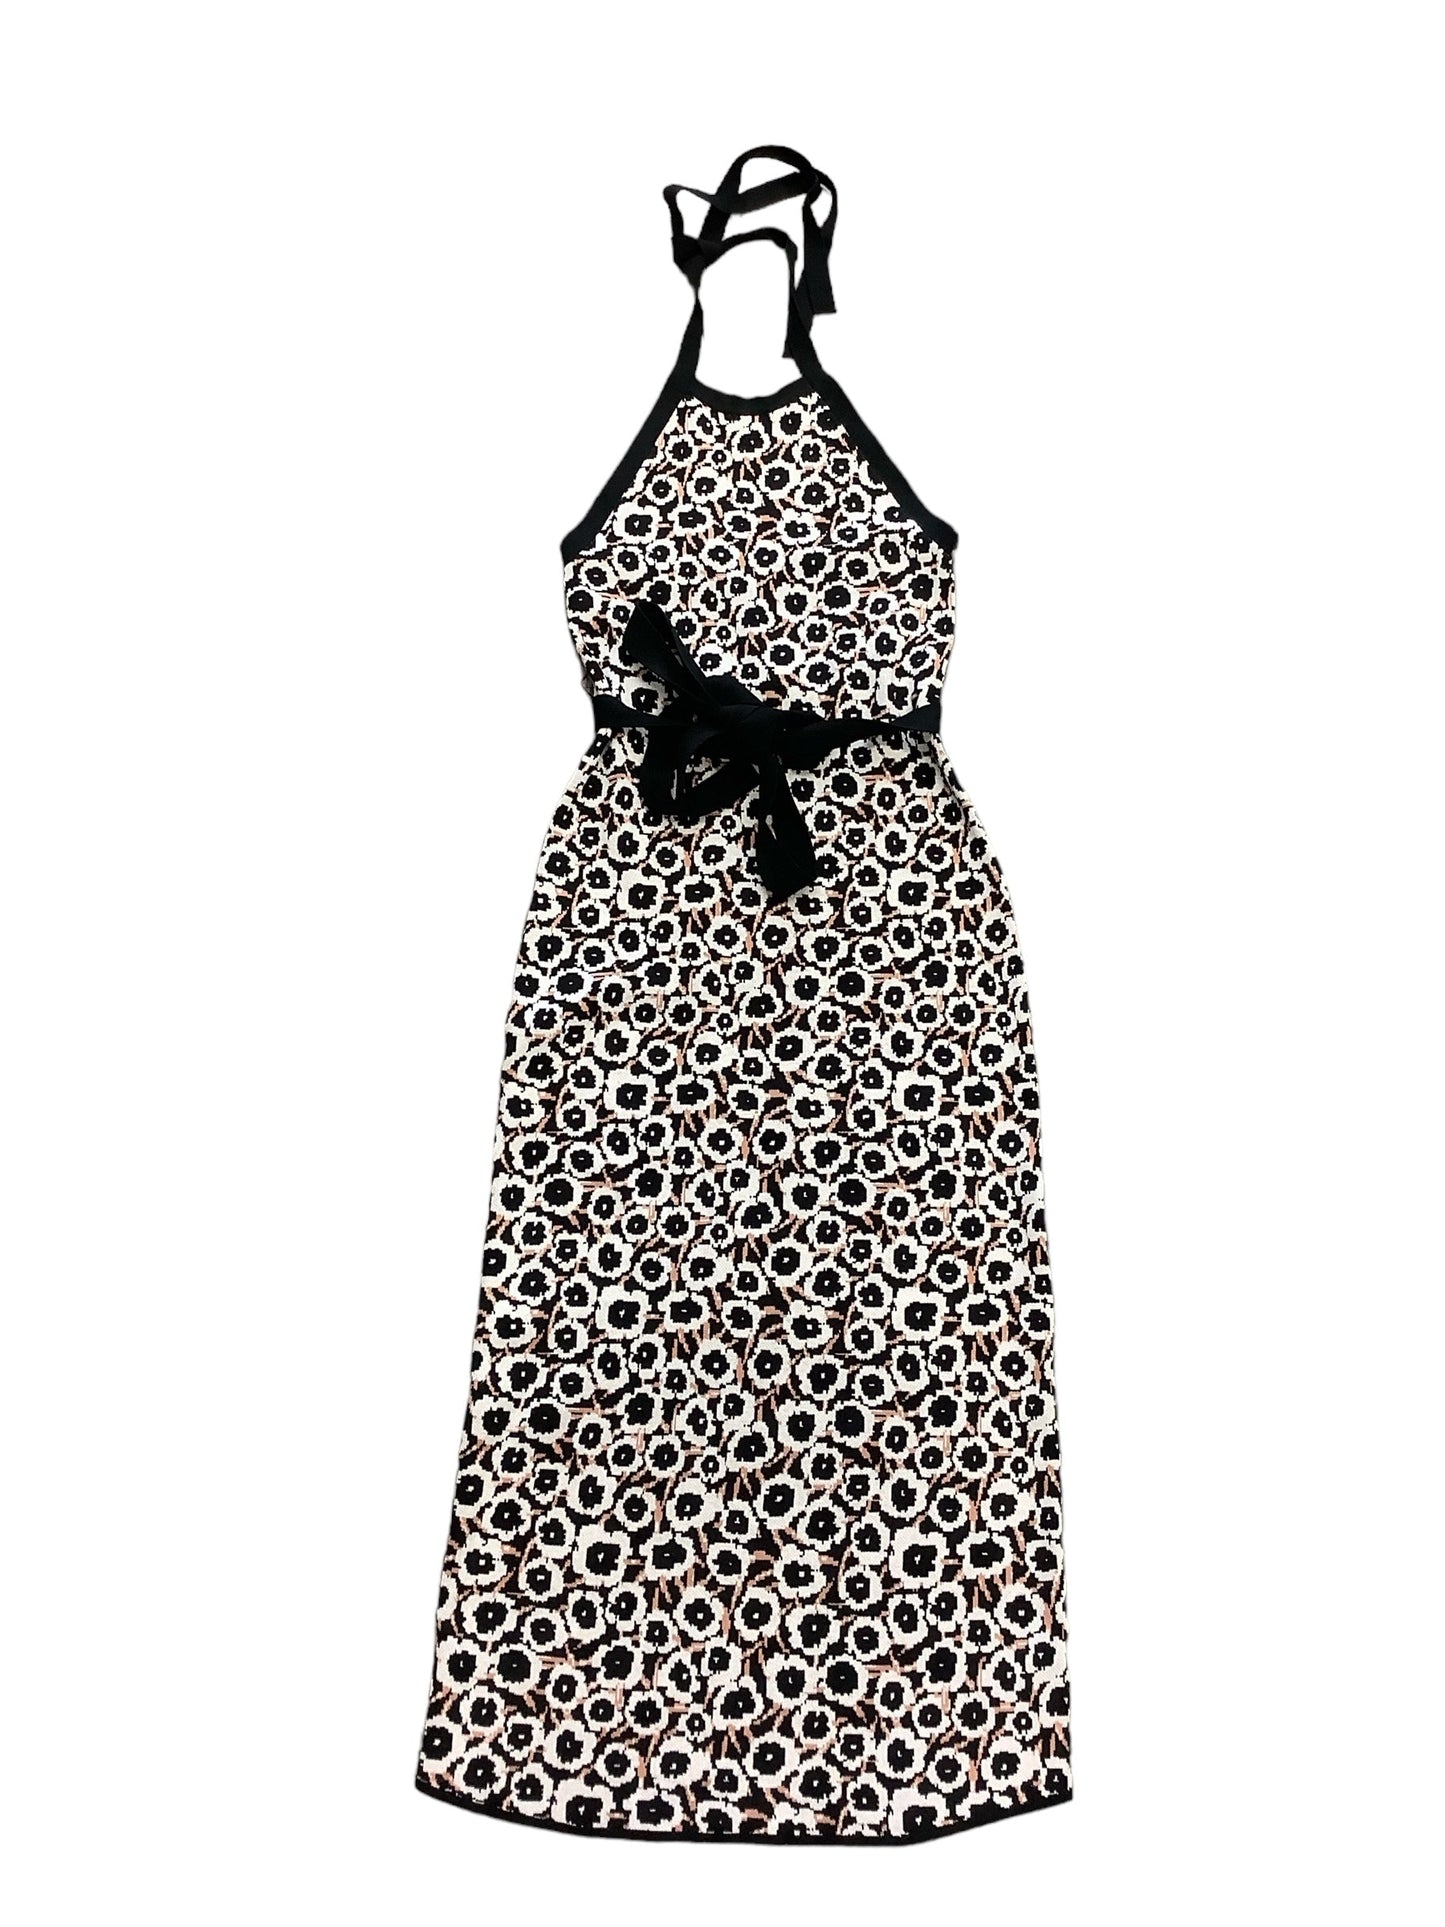 Black Dress Designer Diane Von Furstenberg, For Target Size S